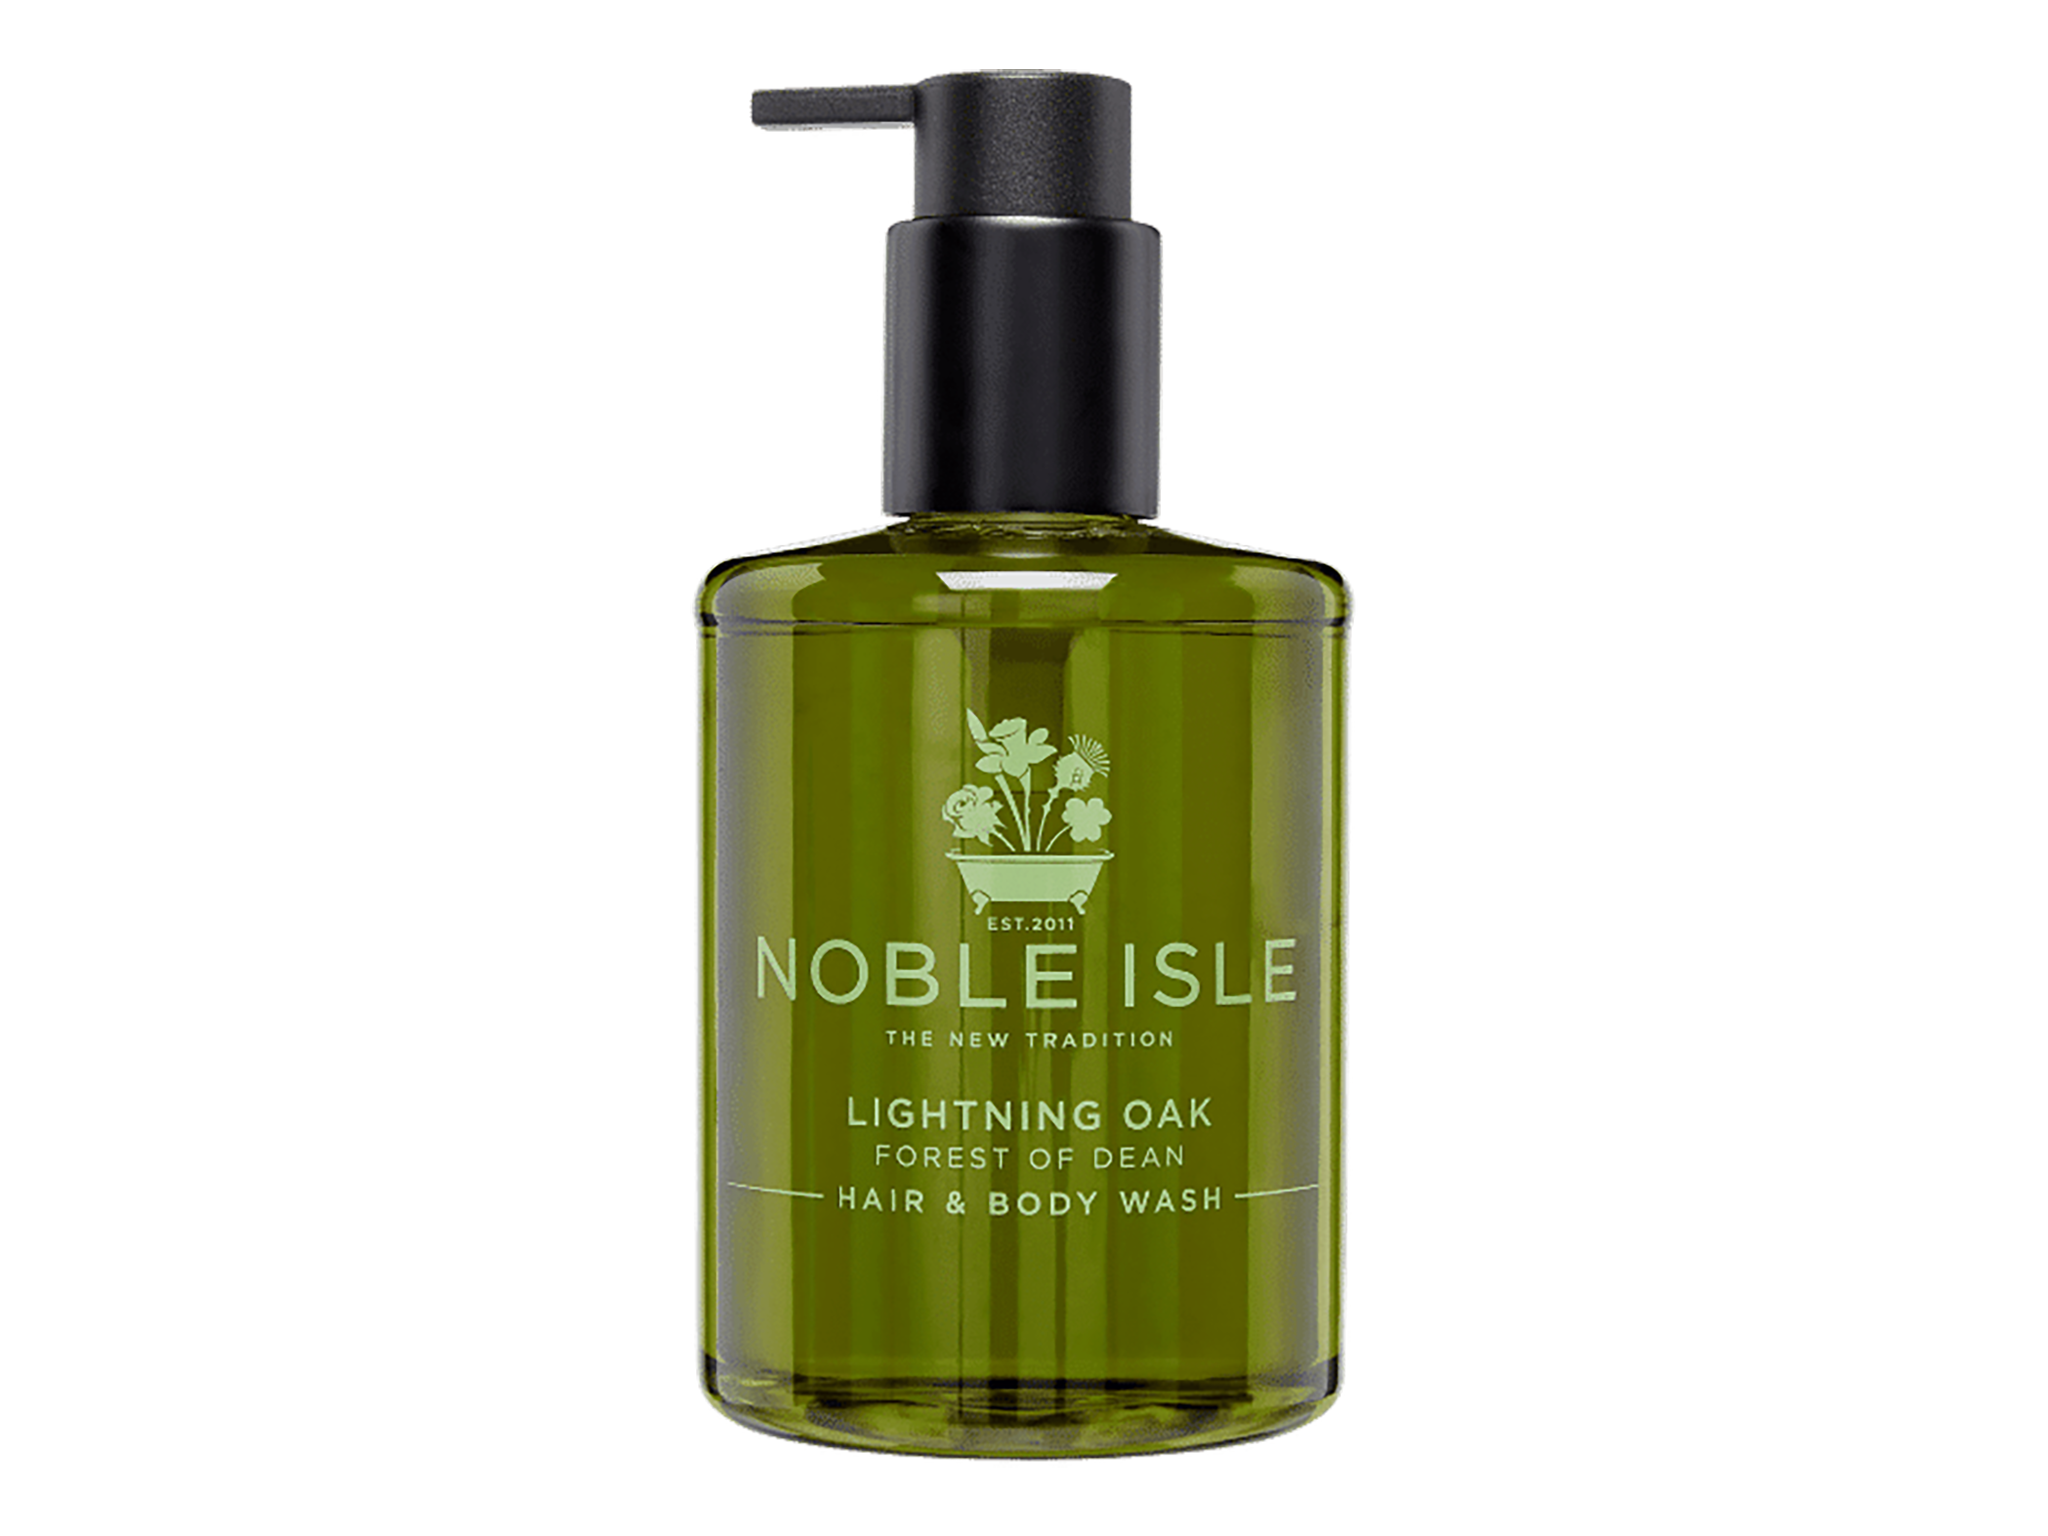 Noble Isle hair and body wash